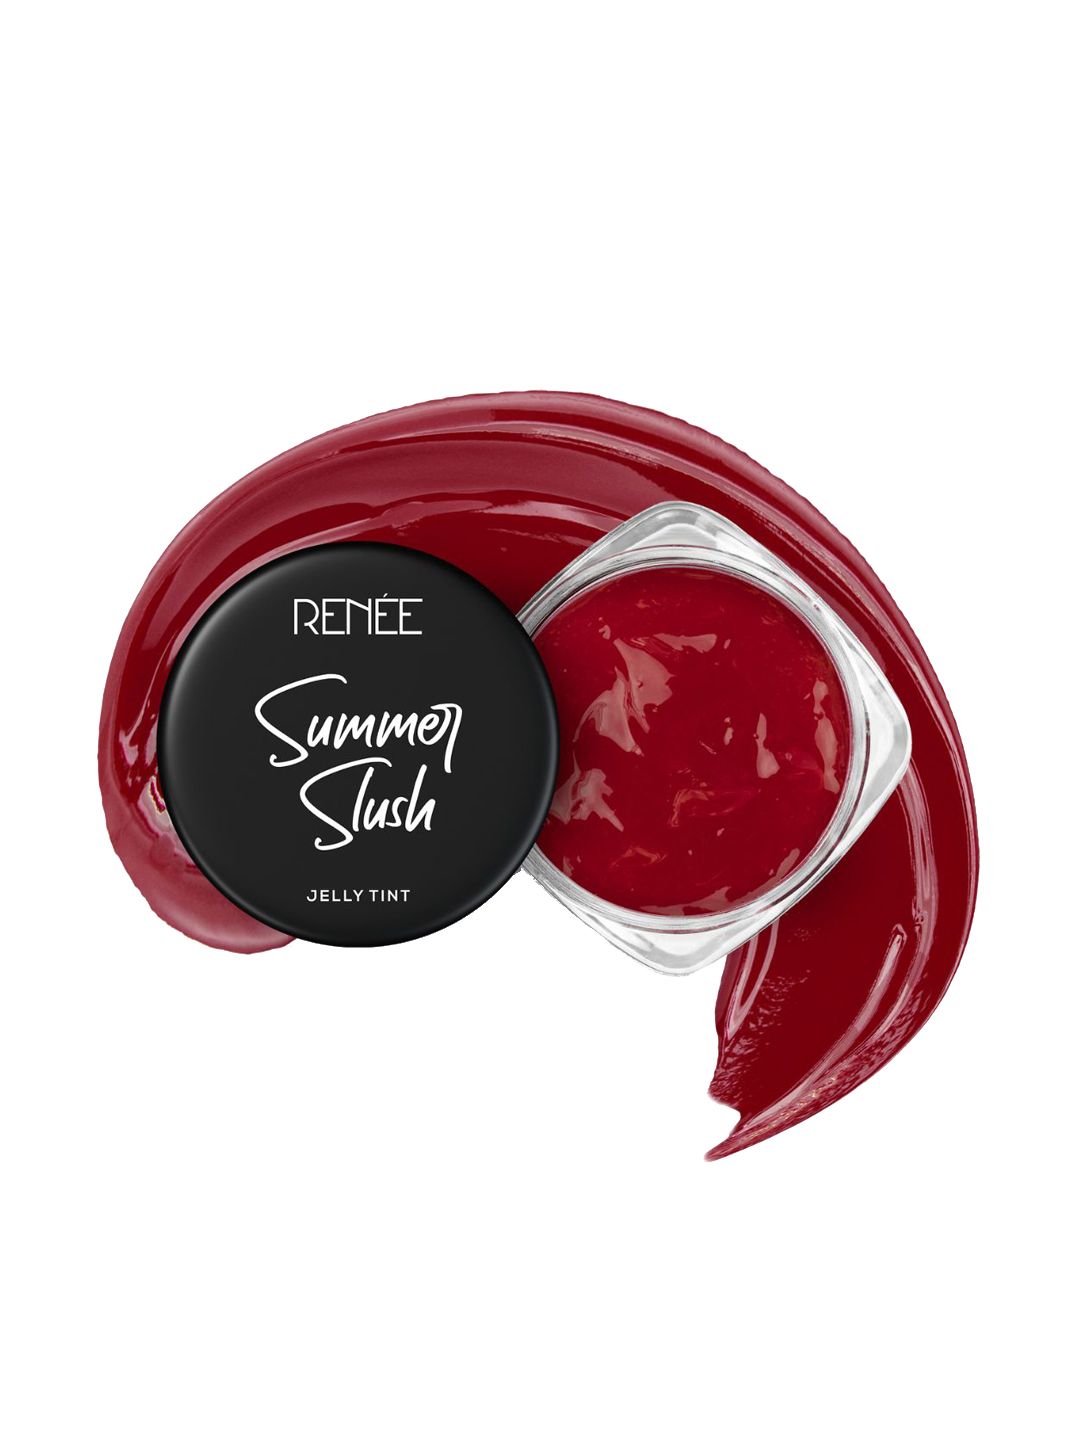 RENEE Summer Slush Jelly Tint - Juicy Strawberry 13g Price in India